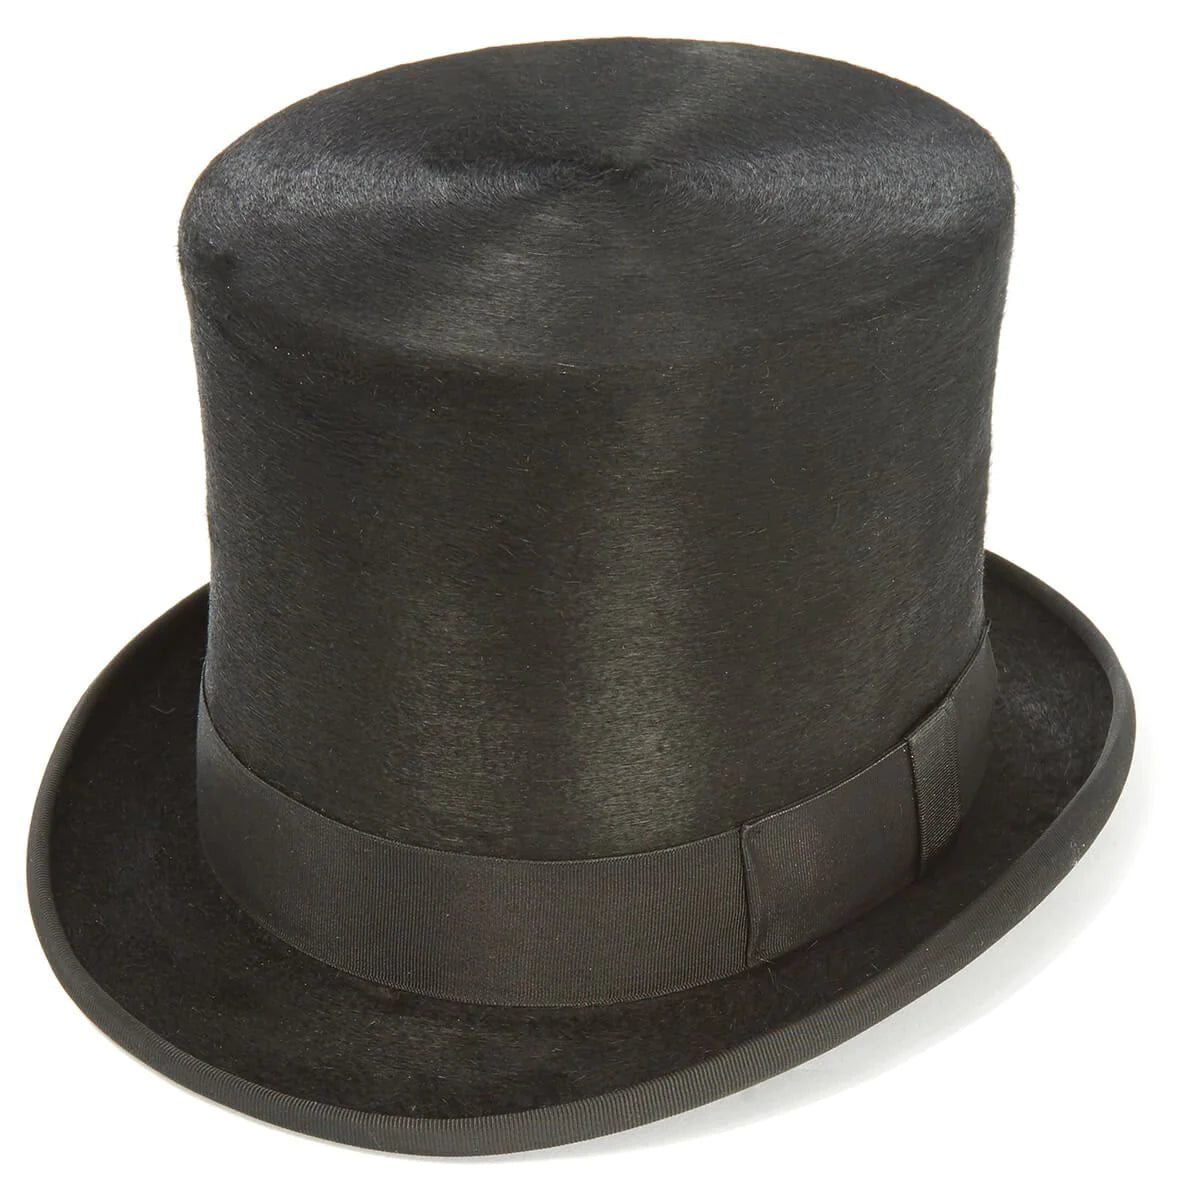 CHRISTYS' Luxury Fur Felt Melusine Taller Top Hat - Antique Silk Look - Black